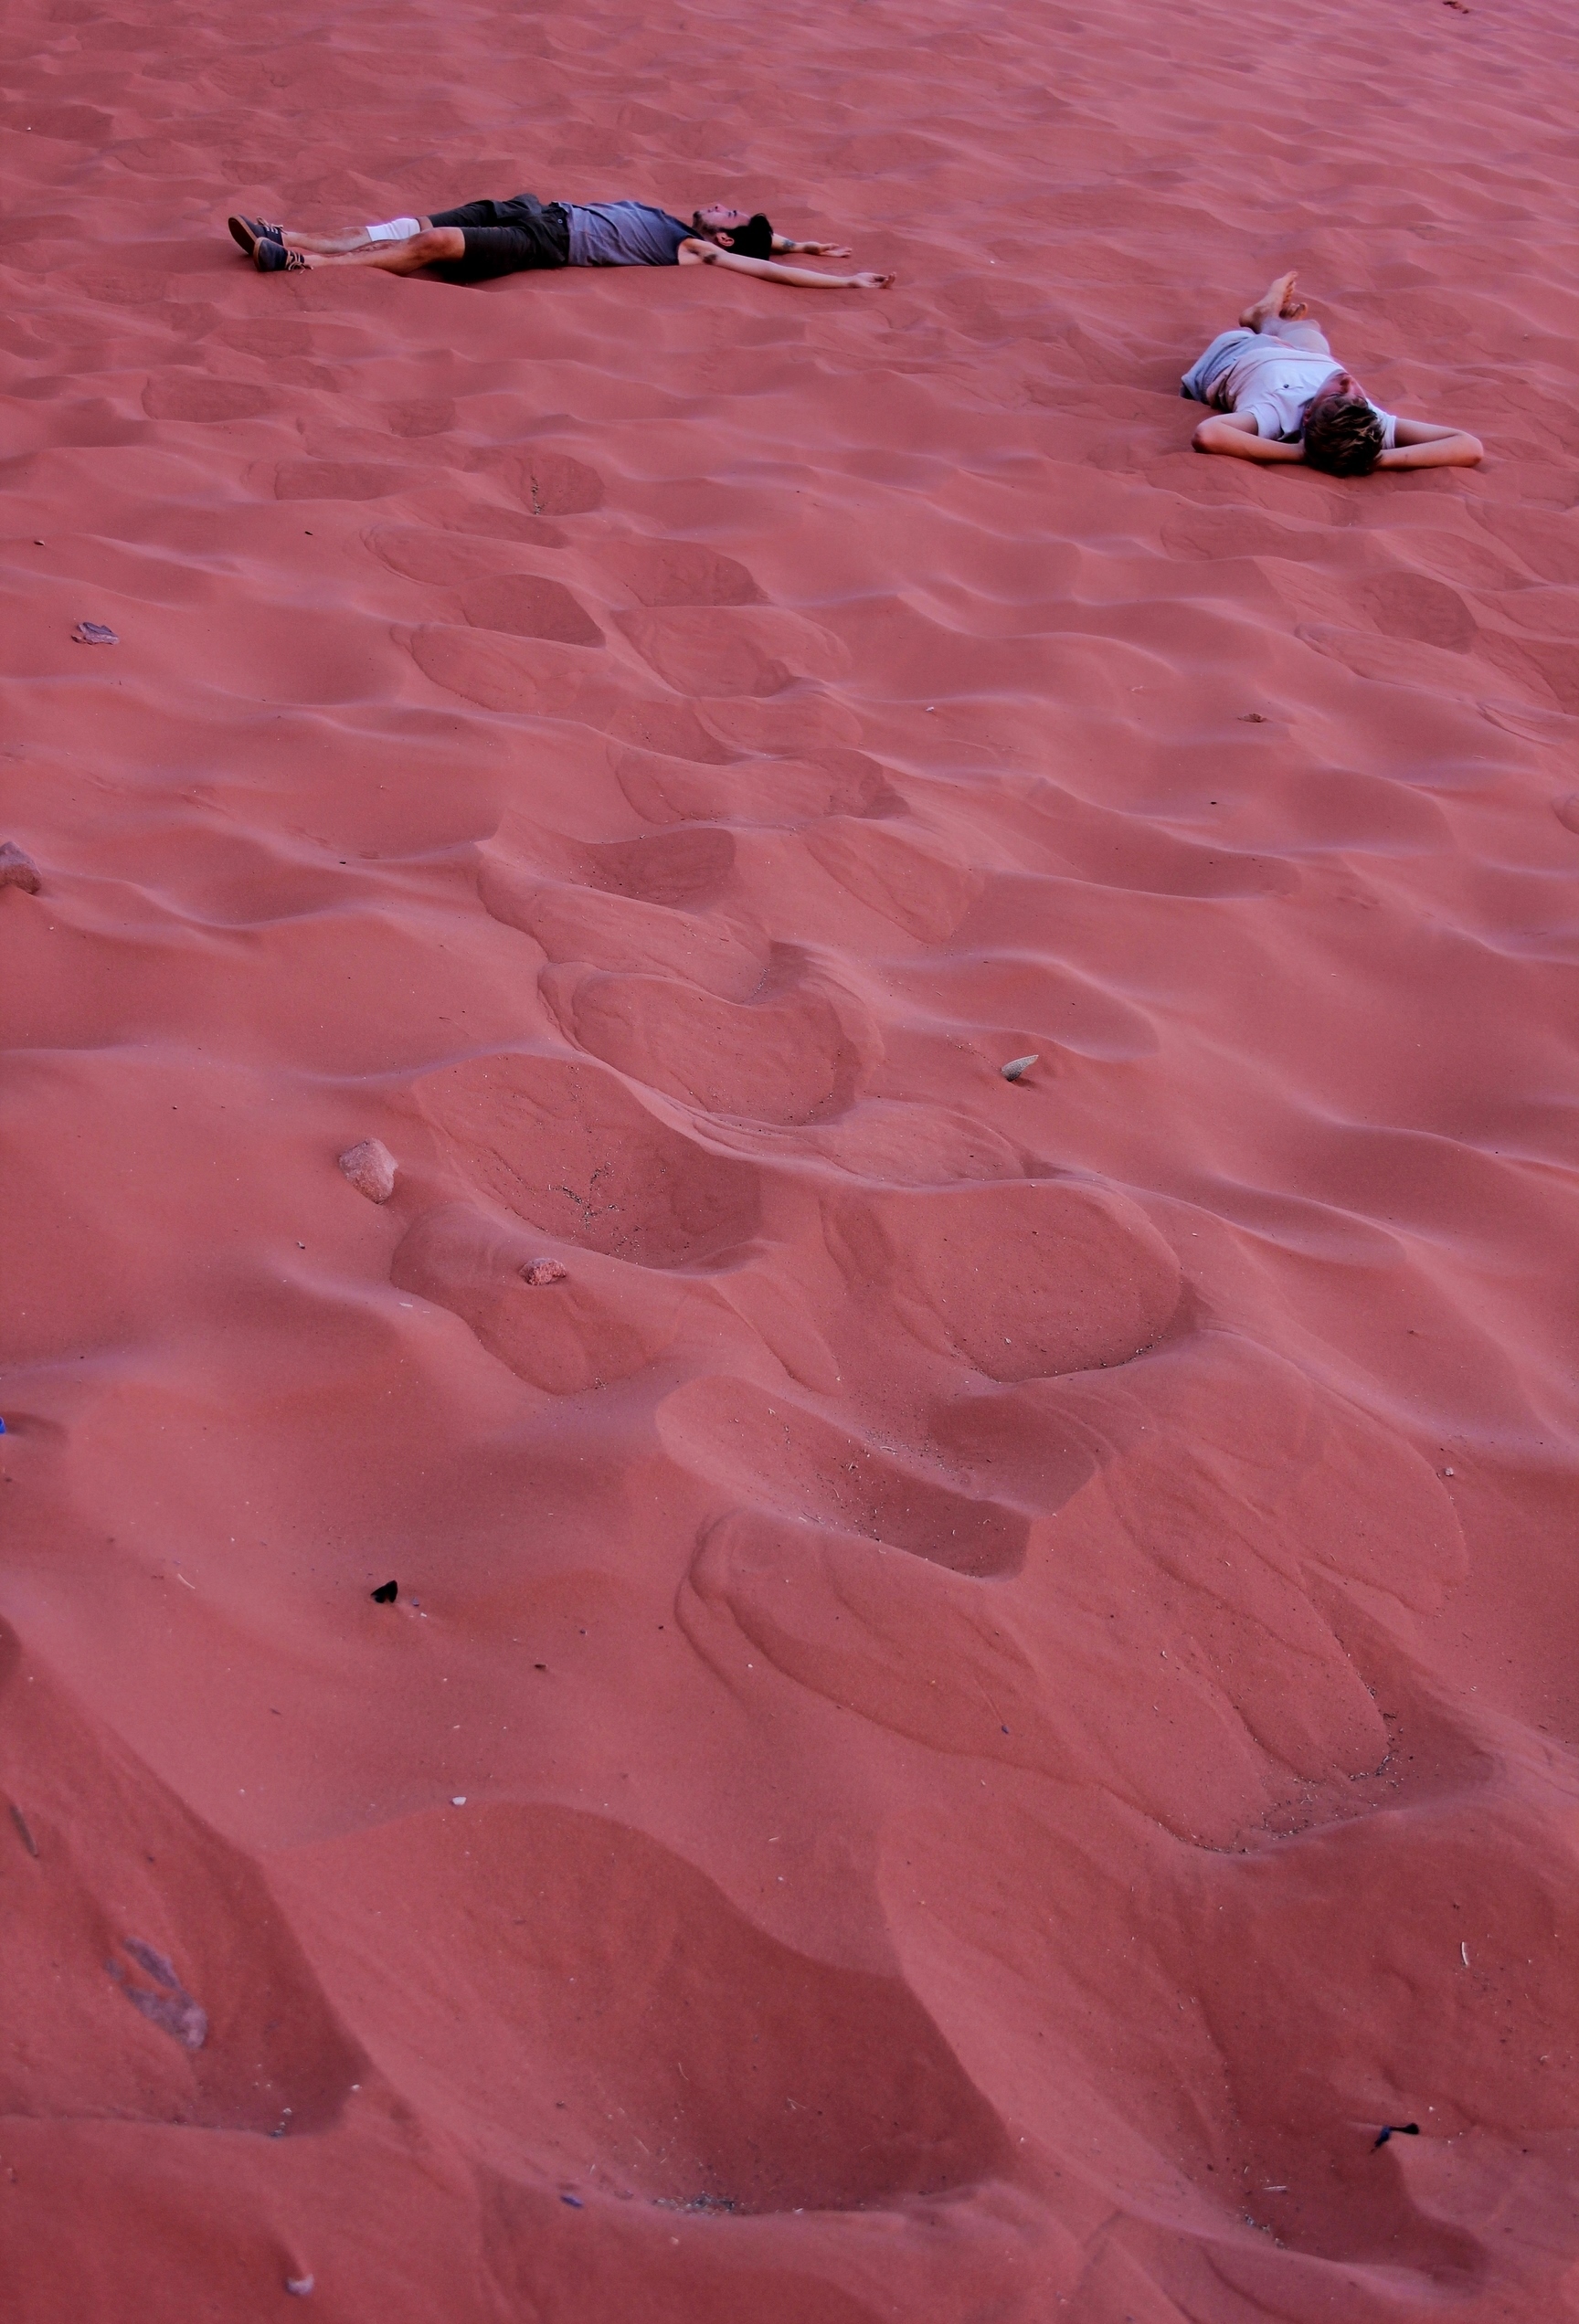 Rolling down the sand dunes of the Wadi Rum Desert!